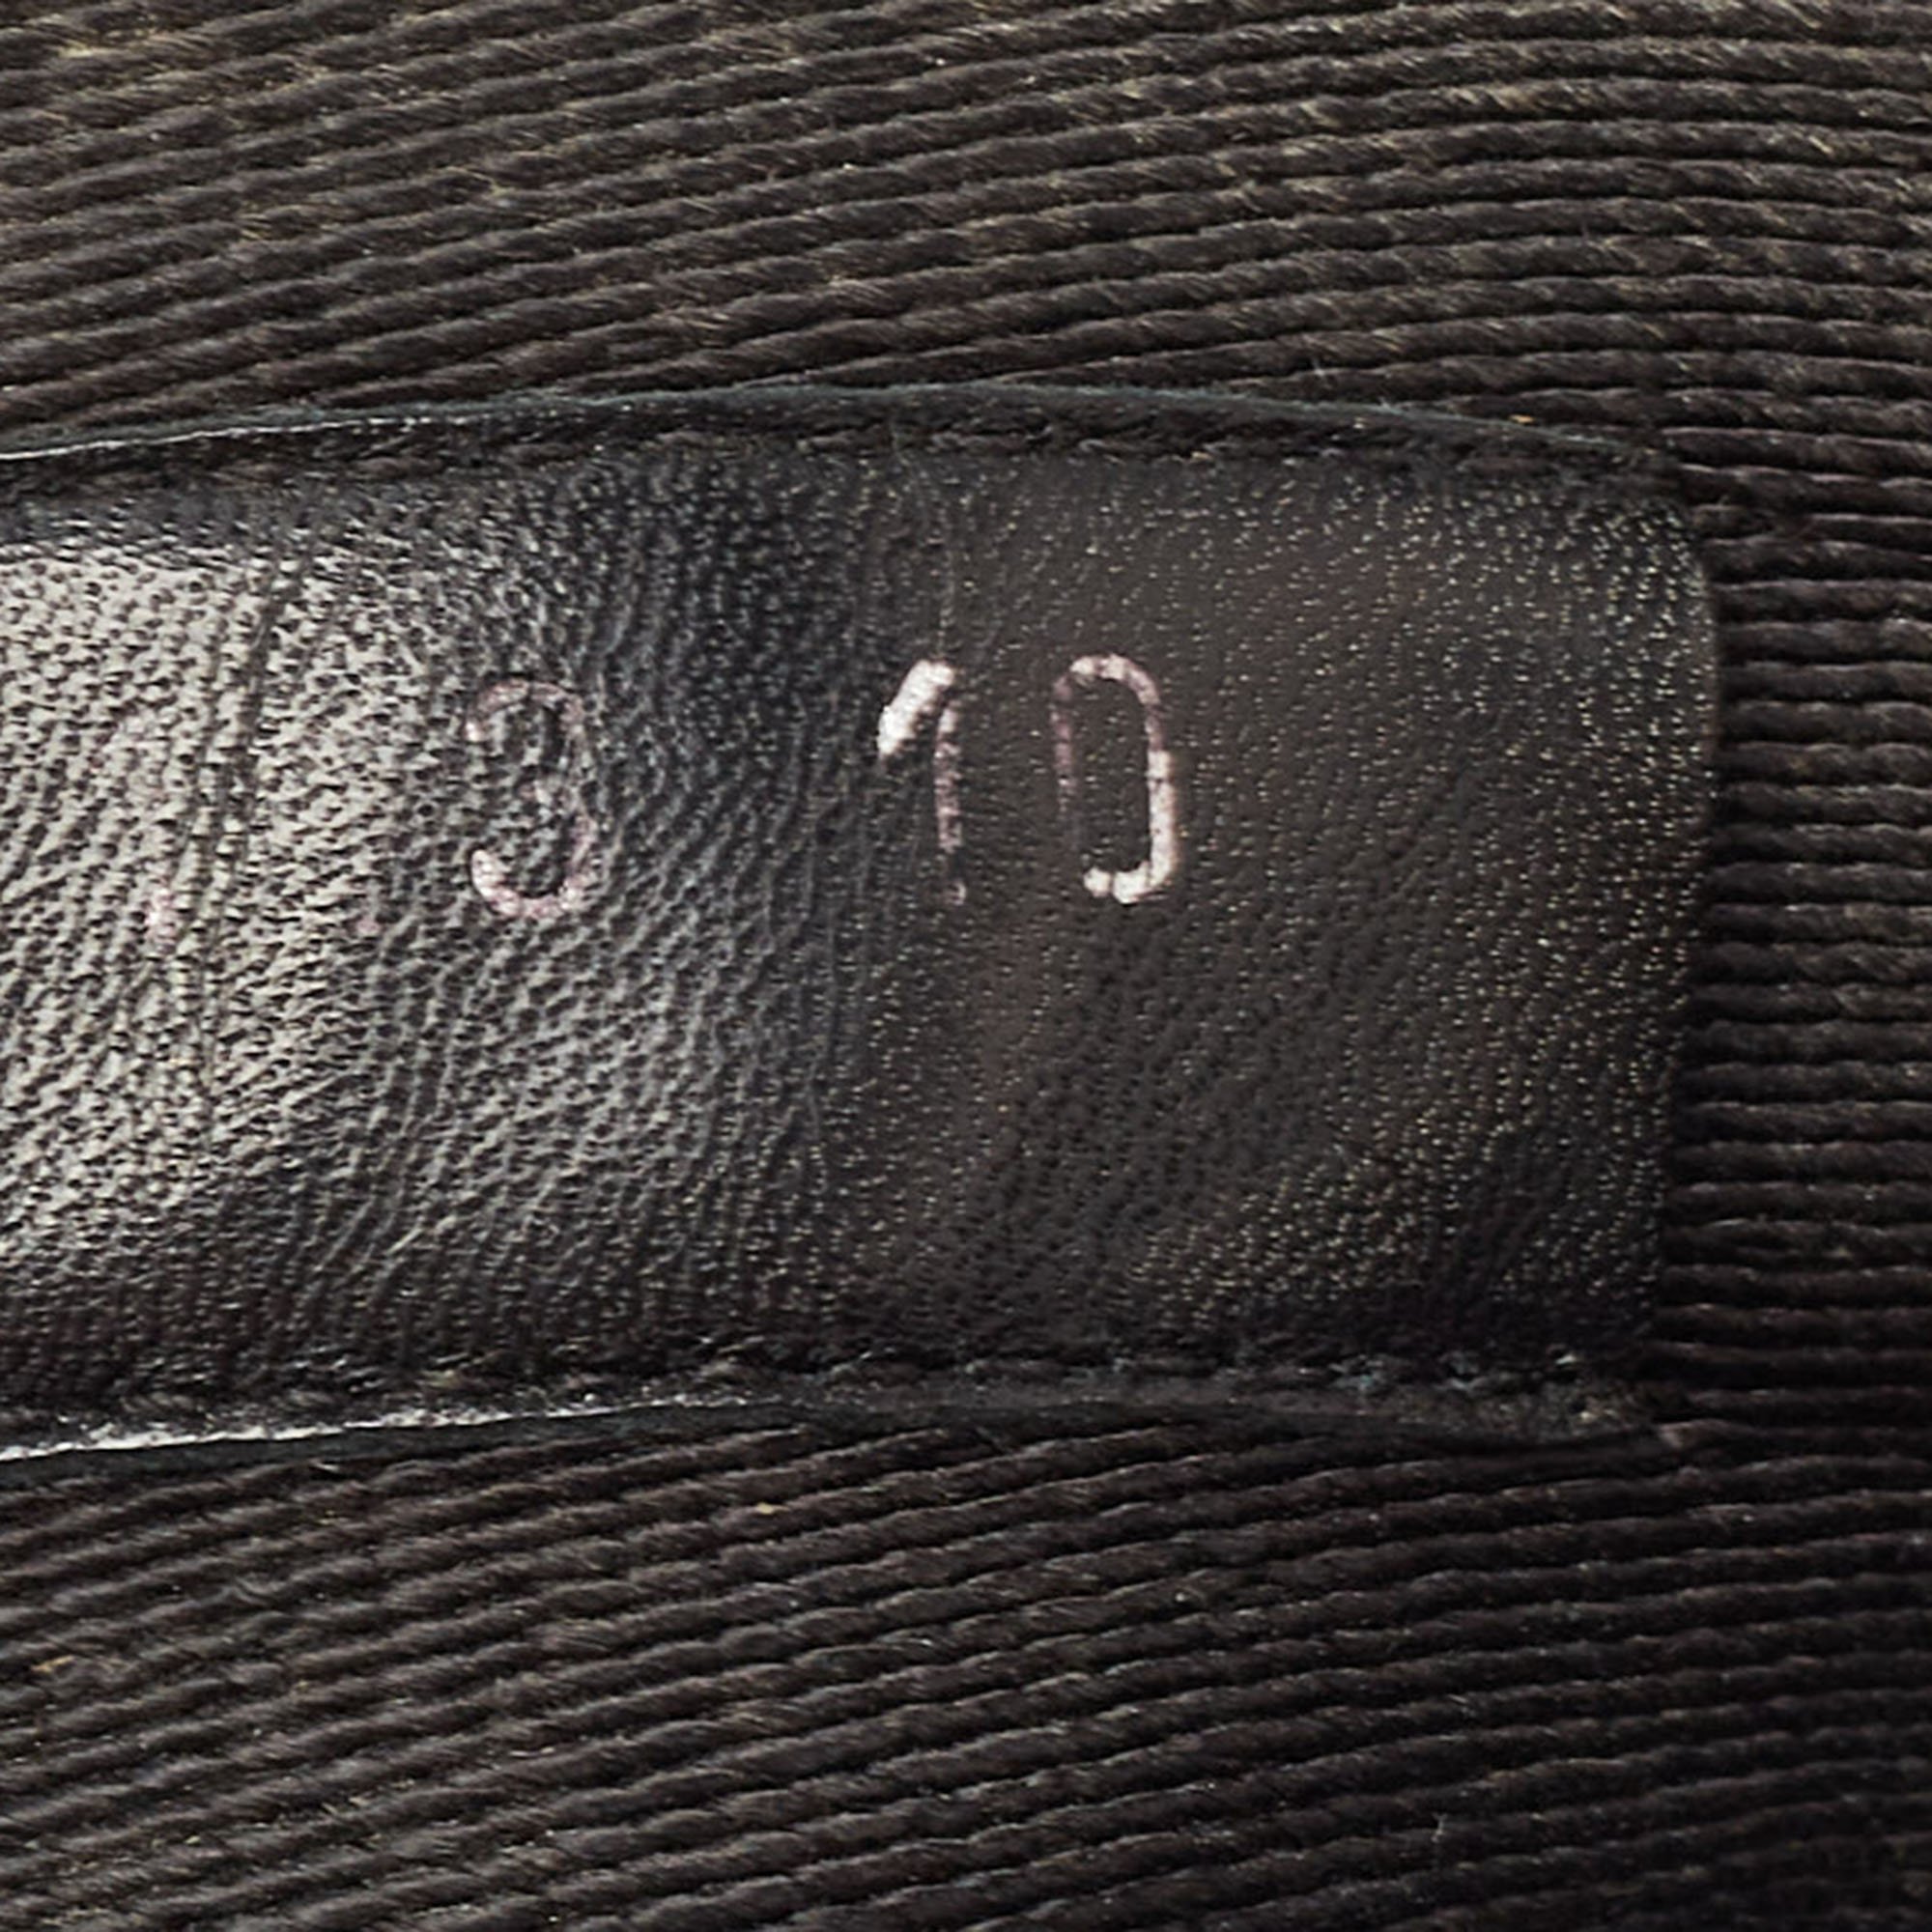 Louis Vuitton Black Leather And Canvas Criss Cross Slides Size 44